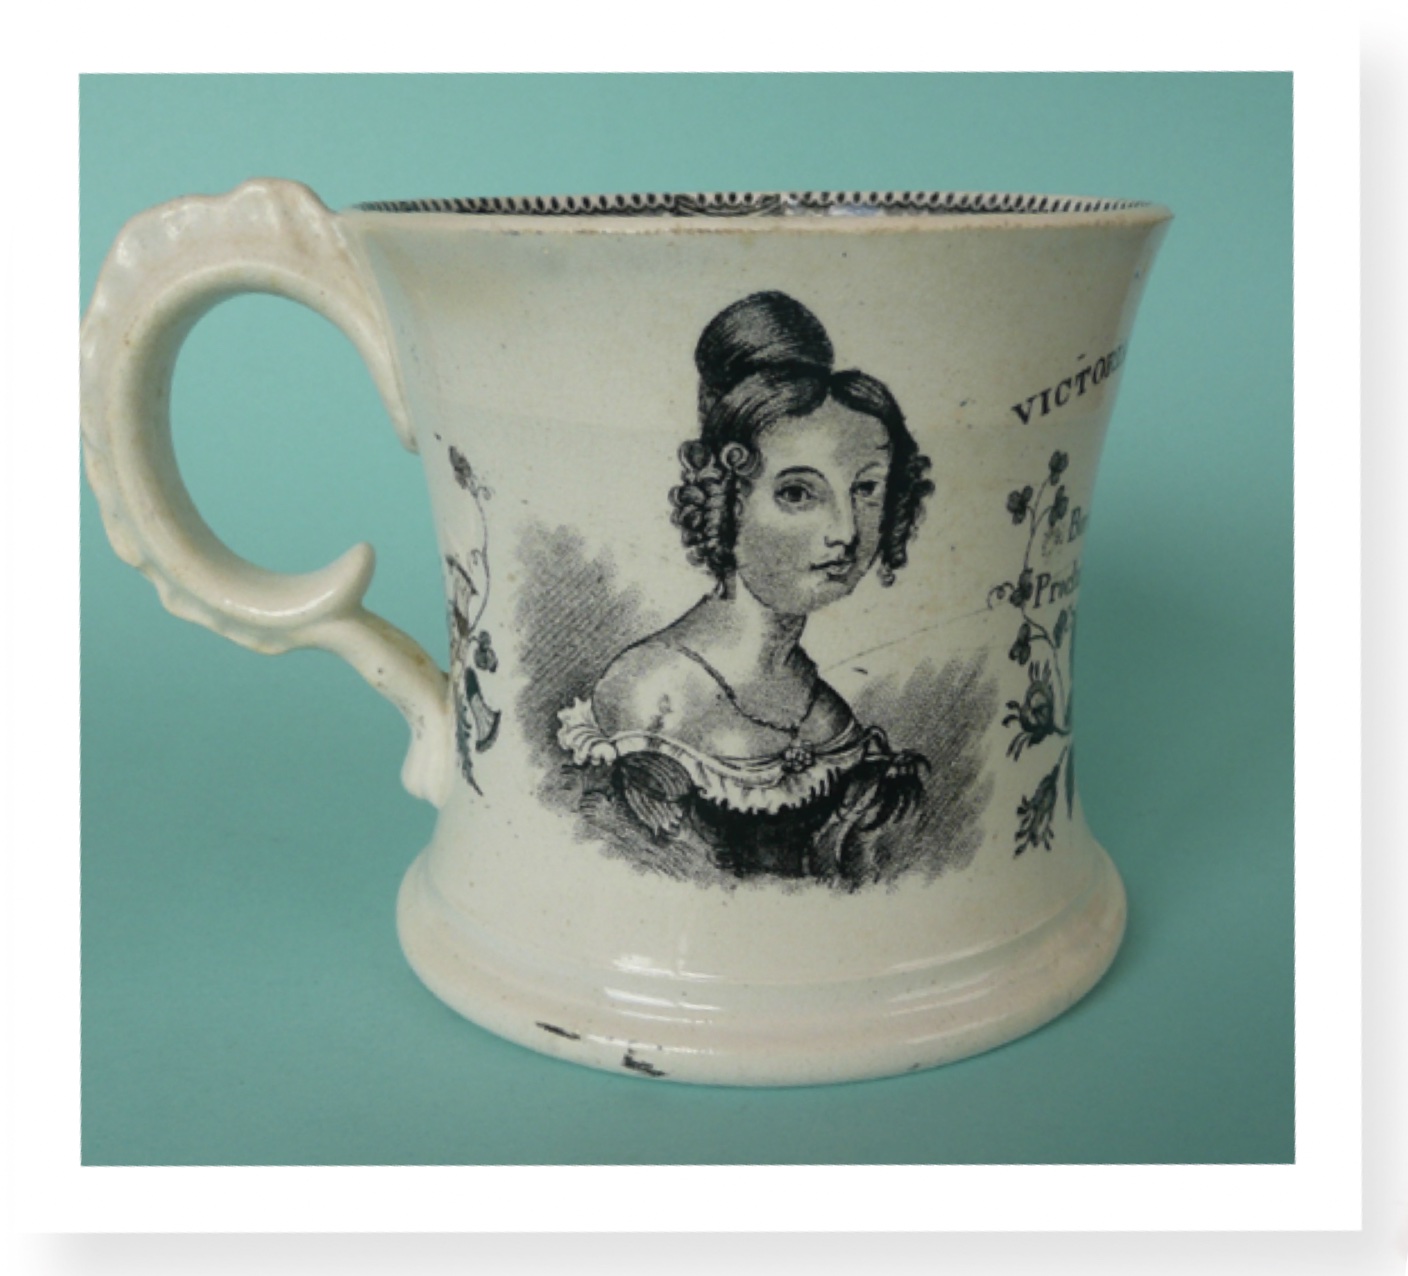 Swansea purple transfer mug marking the coronation of Queen Victoria in 1838